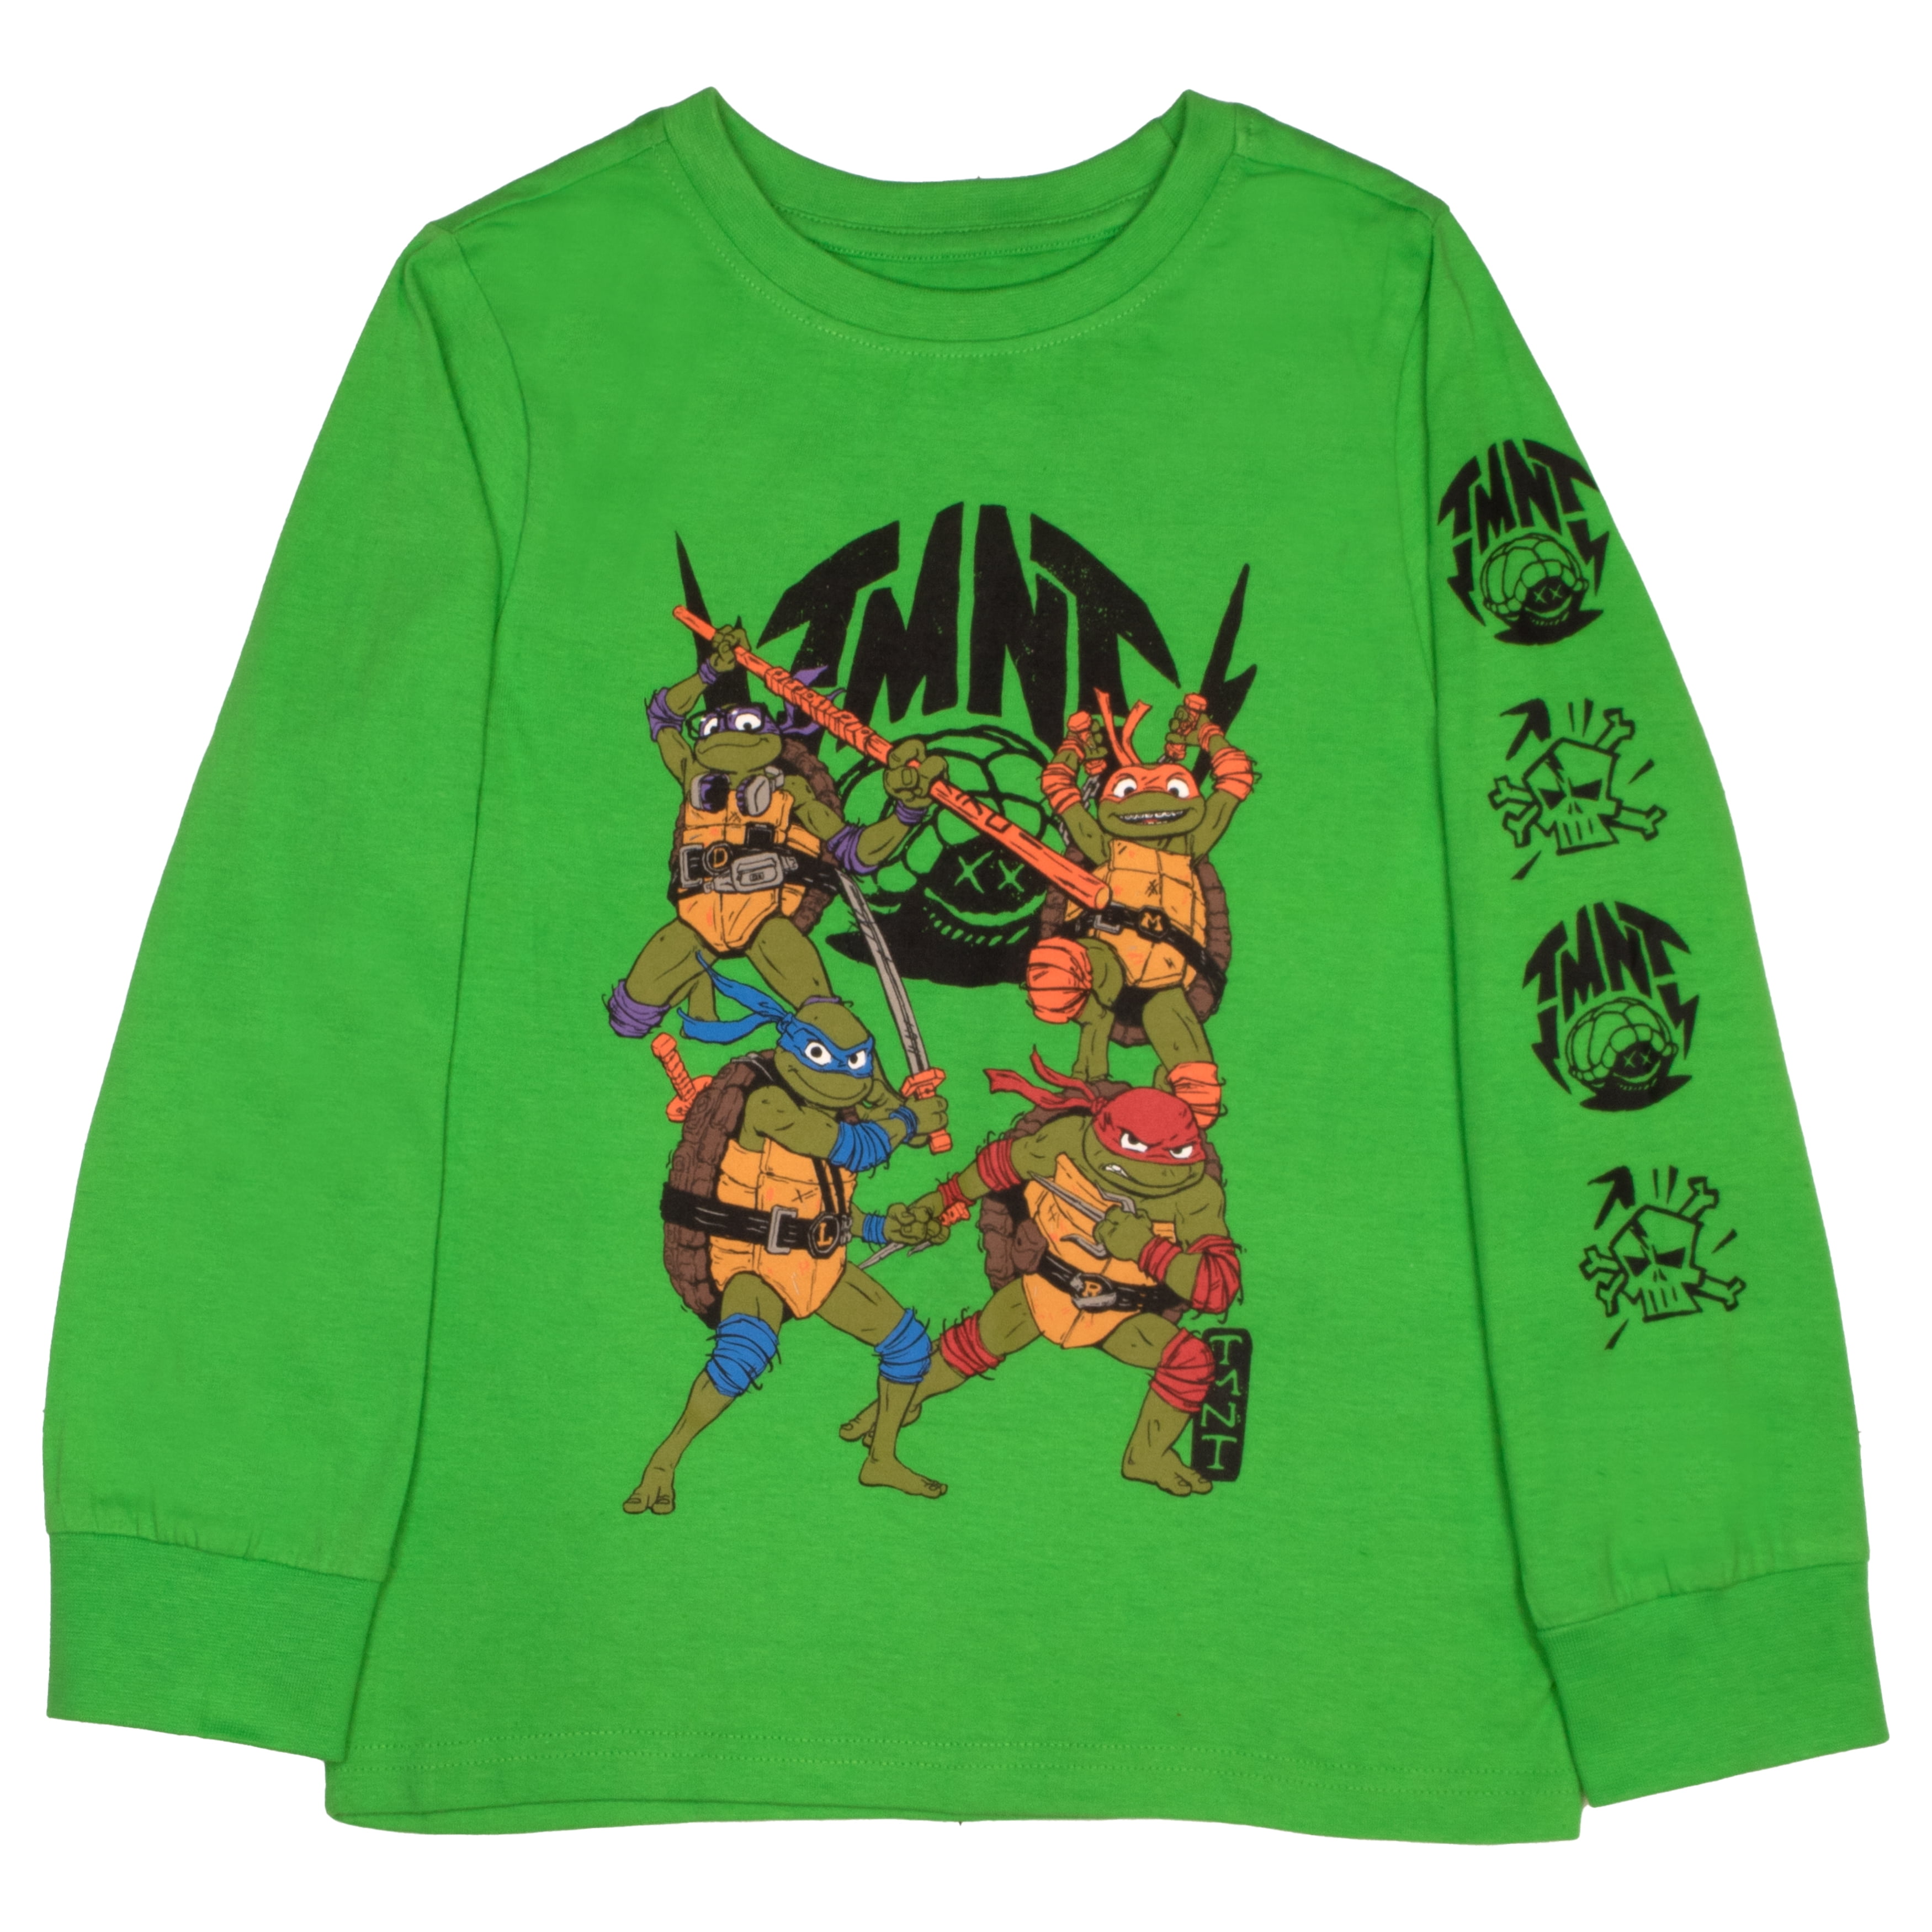  Nickelodeon Boys' Little Rise of The Teenage Mutant Ninja  Turtles TMNT T-Shirt, Black, Small: Clothing, Shoes & Jewelry